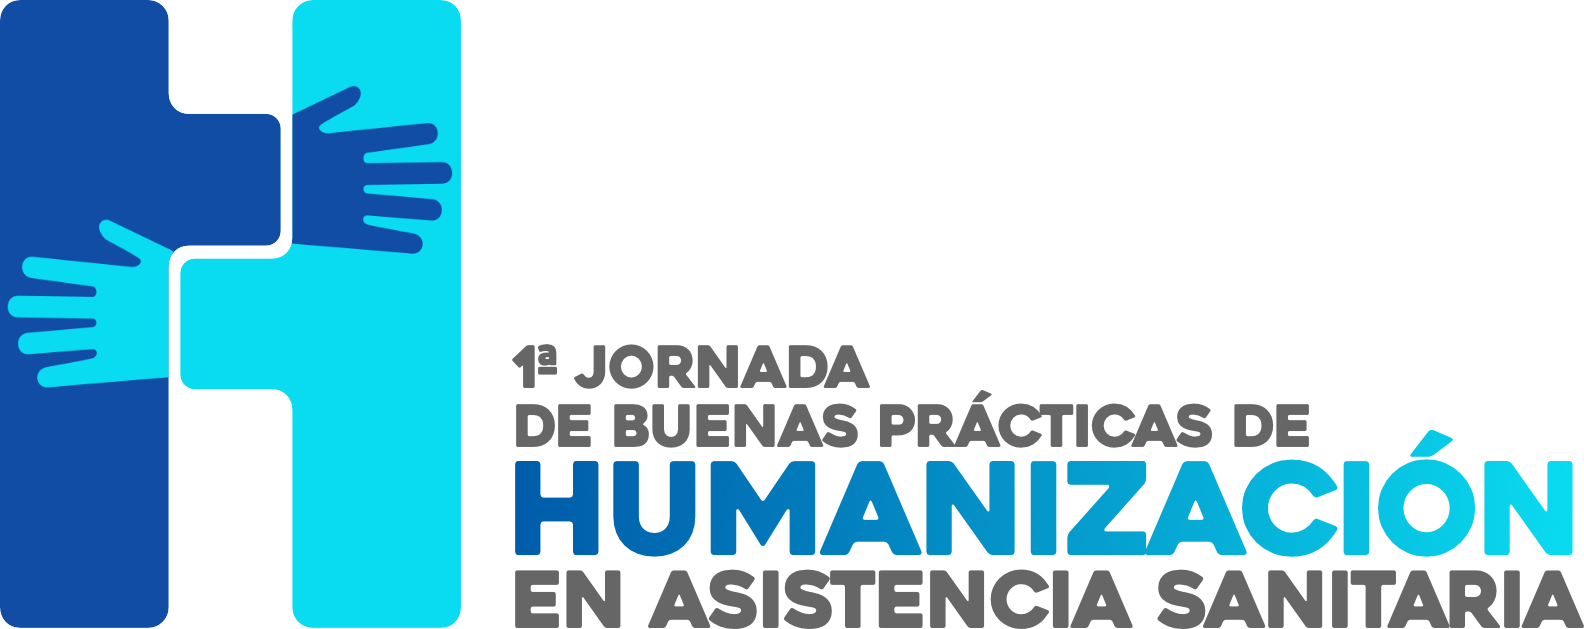 jornada humanizacion logo